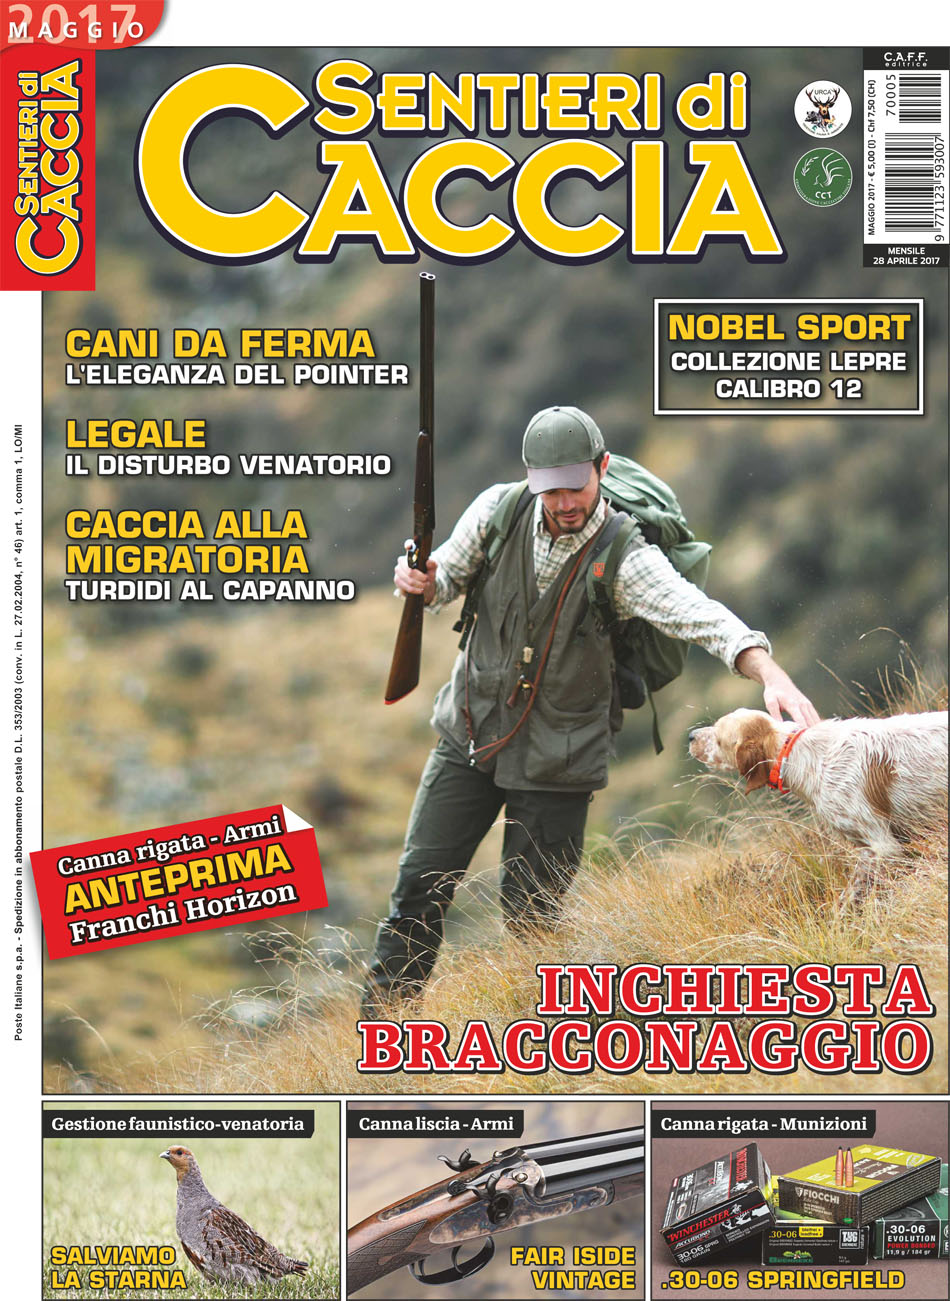 Matteo Brogi: Managing director of the monthly magazine SENTIERI DI CACCIA. Since 2017, April